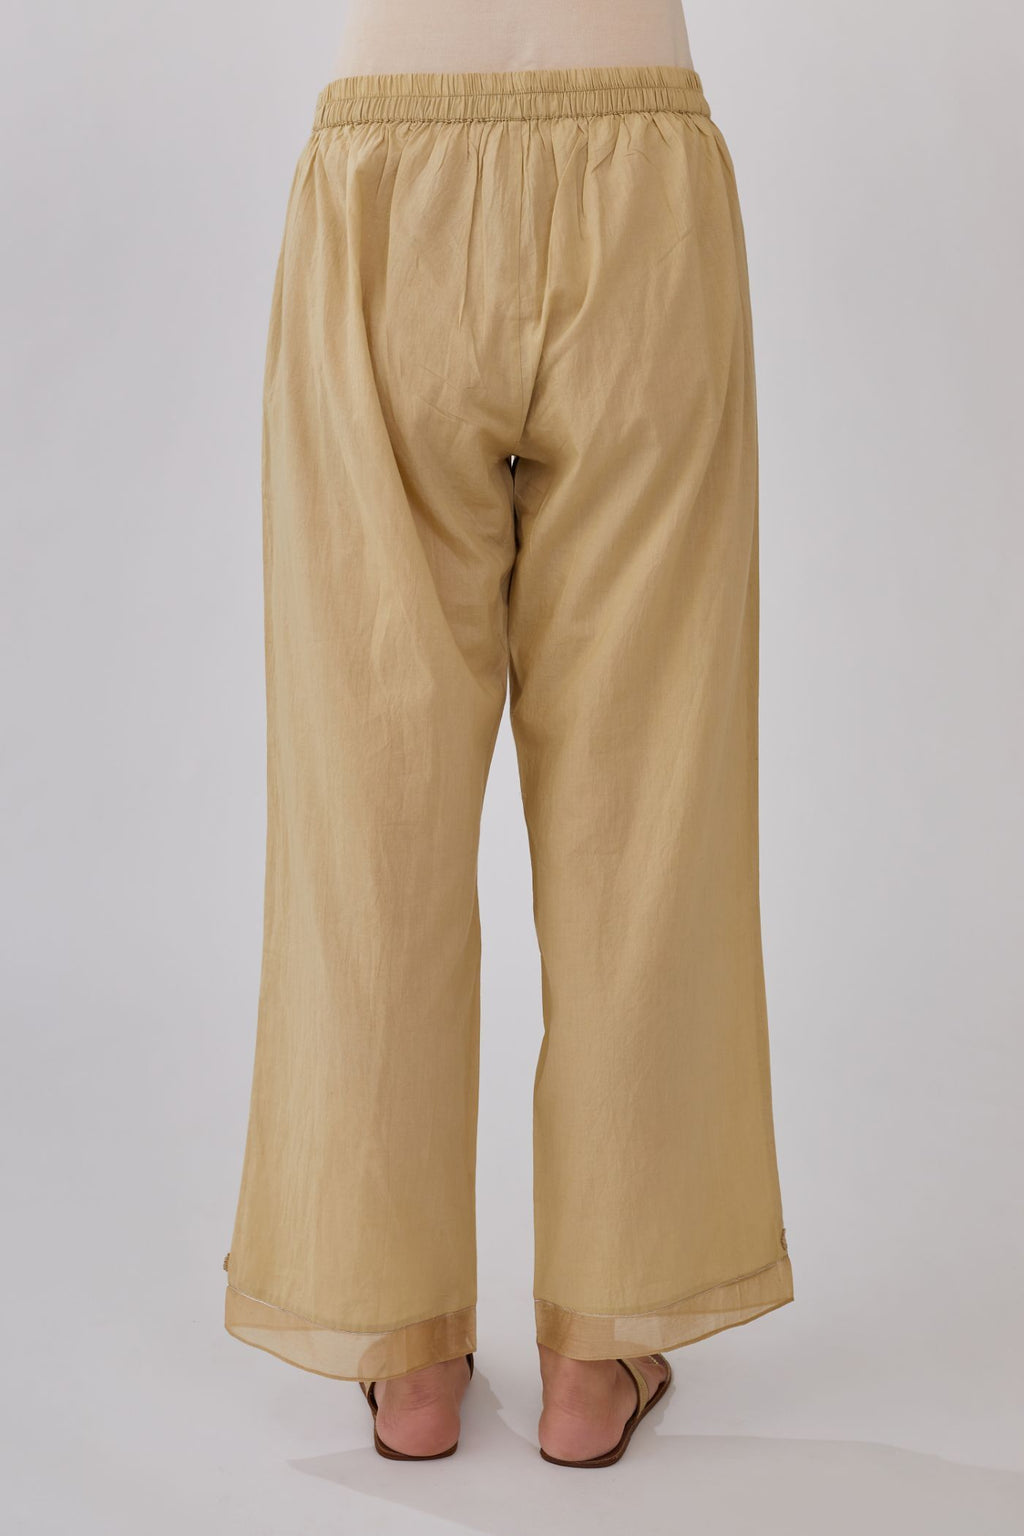 Olive straight pants with gota and silk chanderi fabric detaling at bottom hem